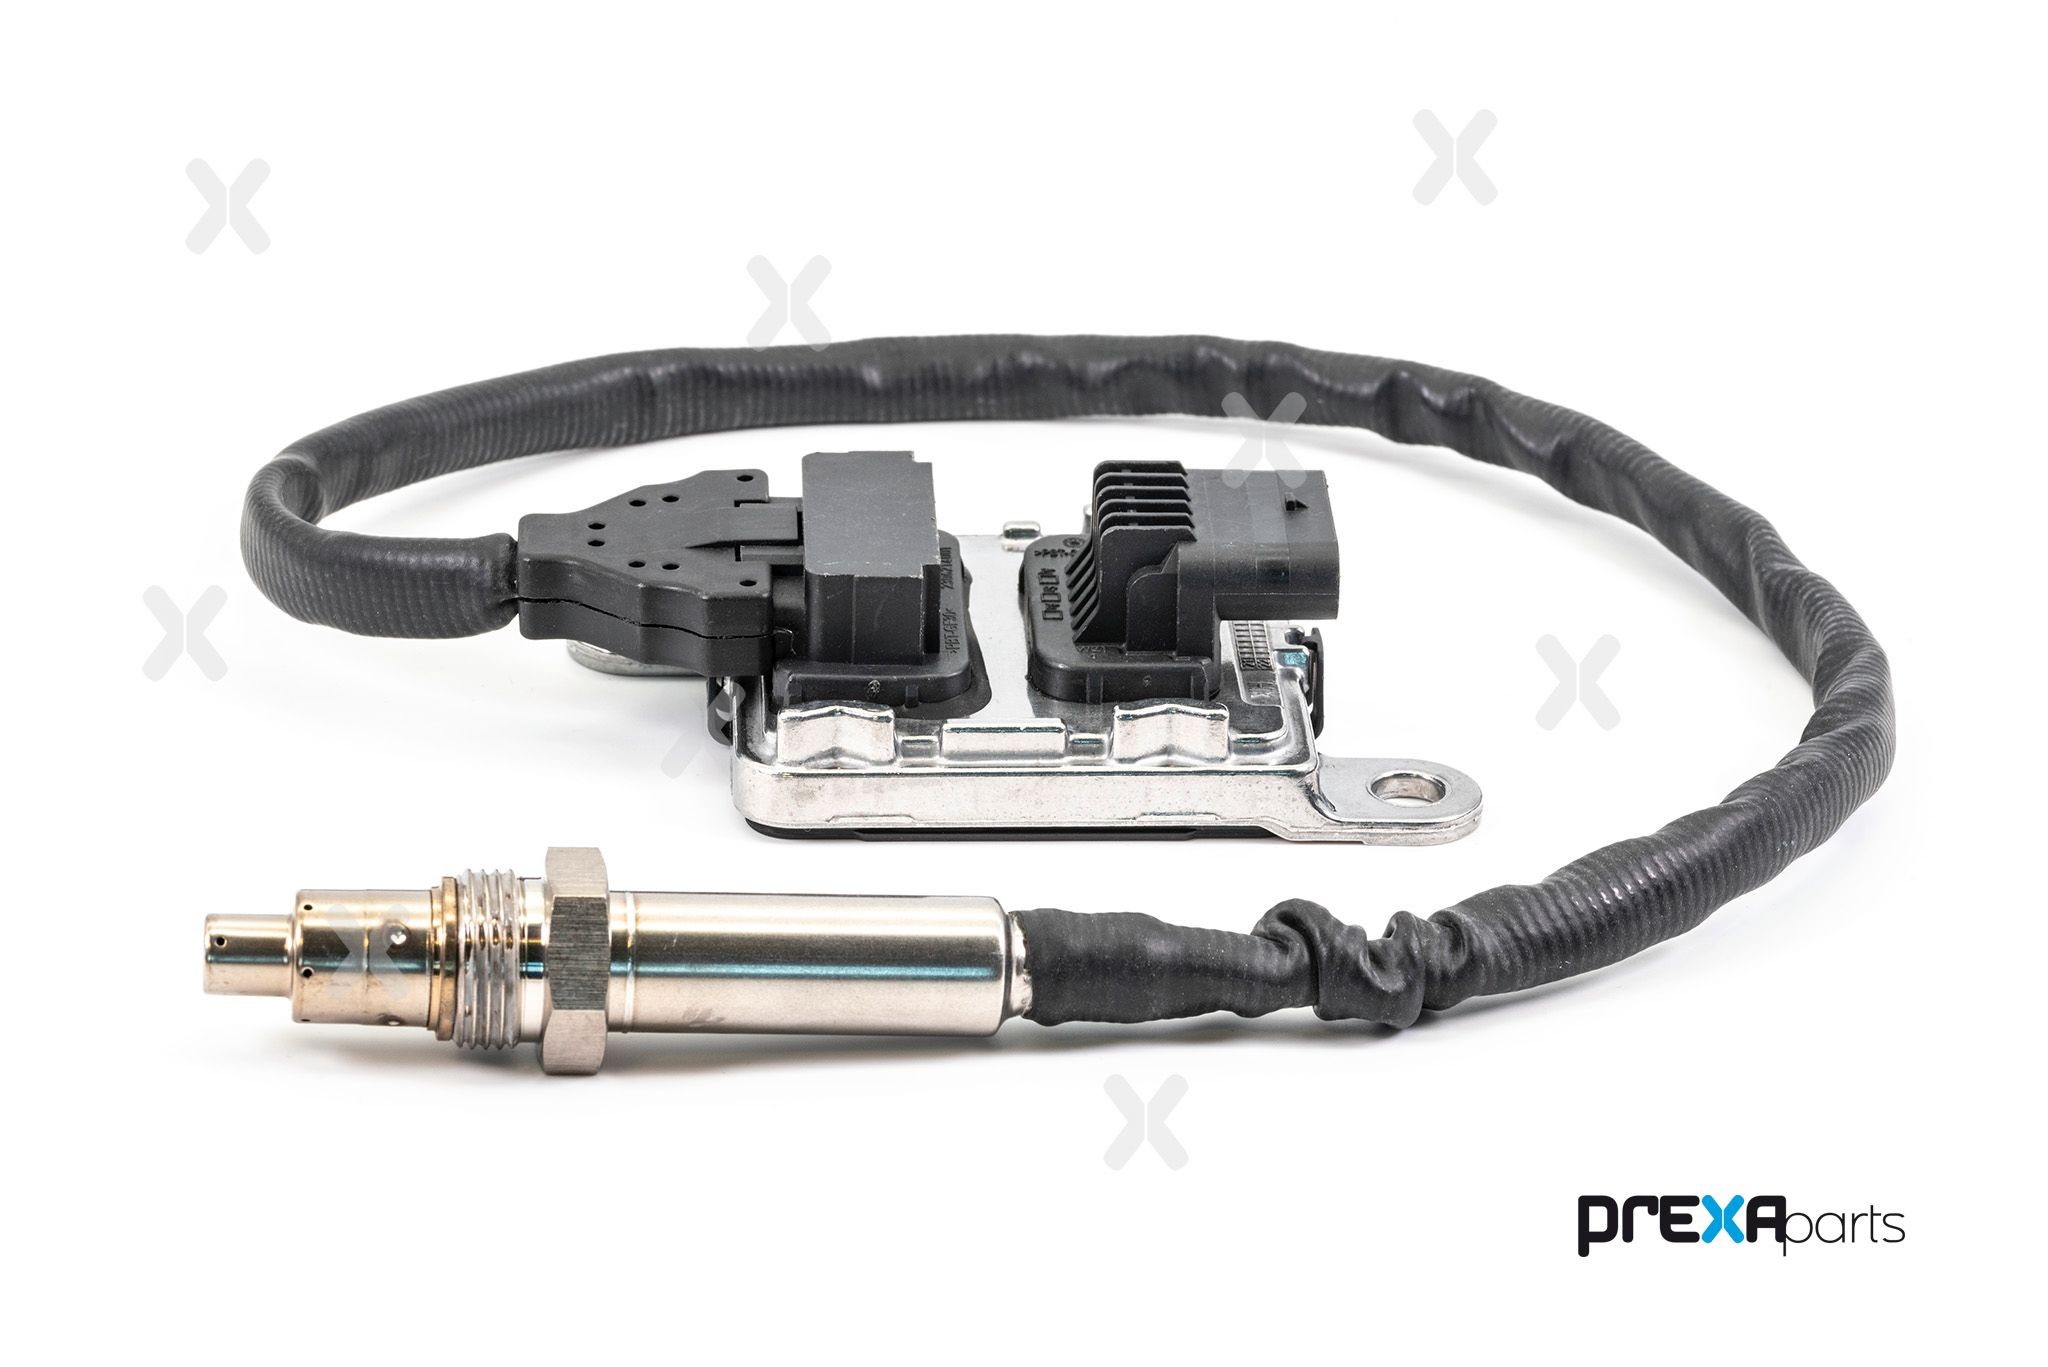 OEM-quality PREXAparts P404015 NOx Sensor, urea injection